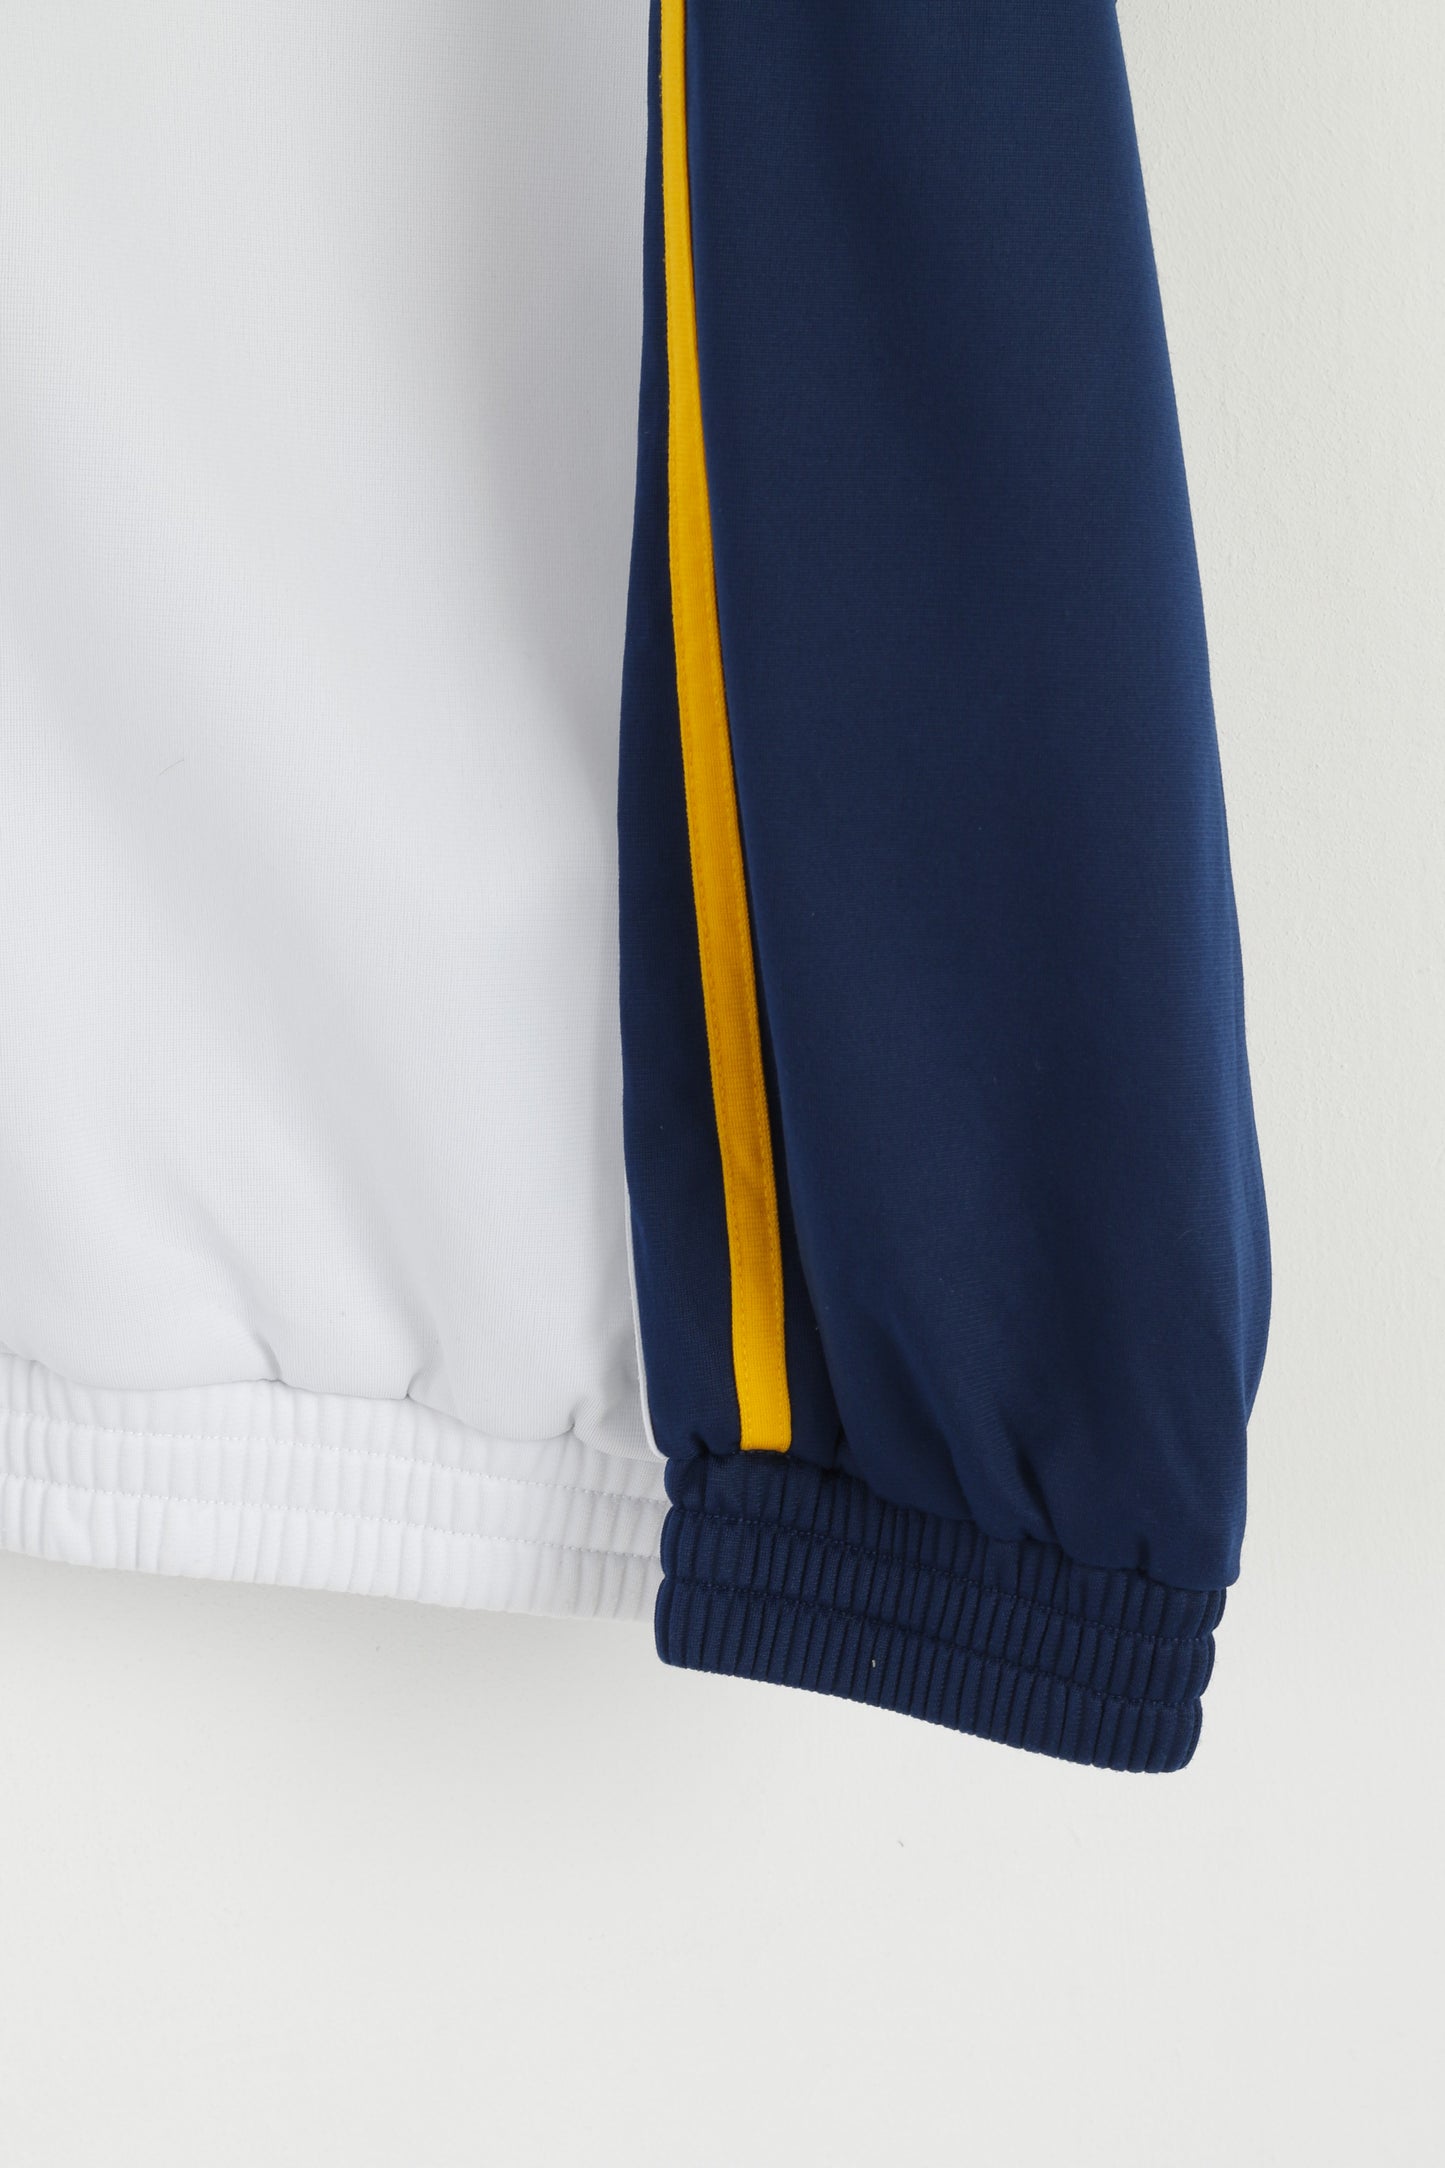 Feroti Sport Men XXL Sweatshirt White Navy Shiny Full Zipper Oldschool Retro Top